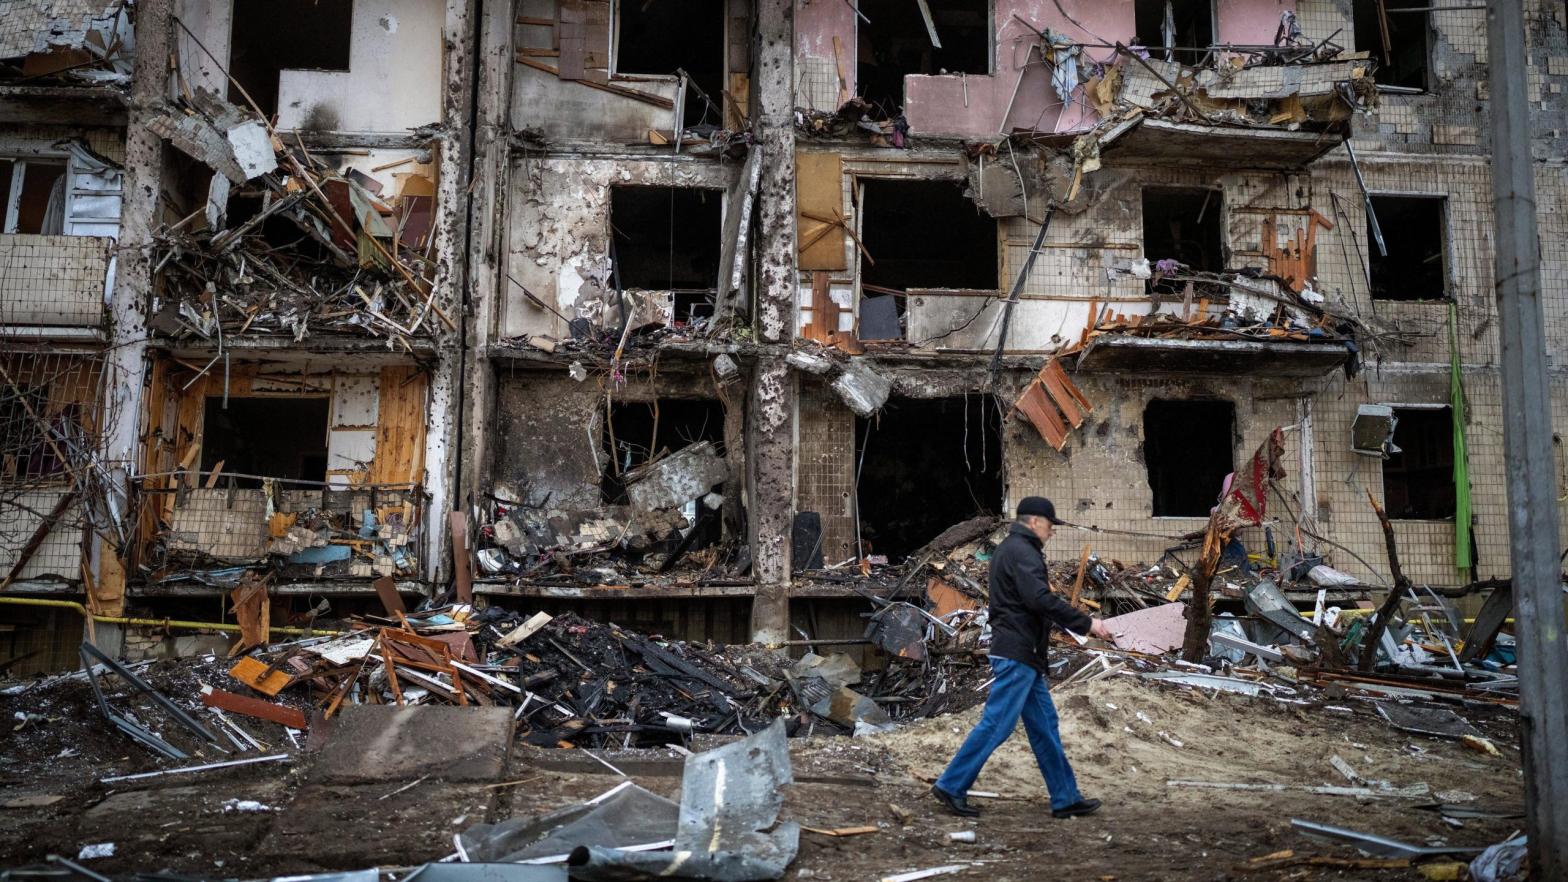 A man walks past a building damaged following a Russian rocket attack in the city of Kyiv, Ukraine on Feb. 25, 2022. (Photo: Emilio Morenatti, AP)